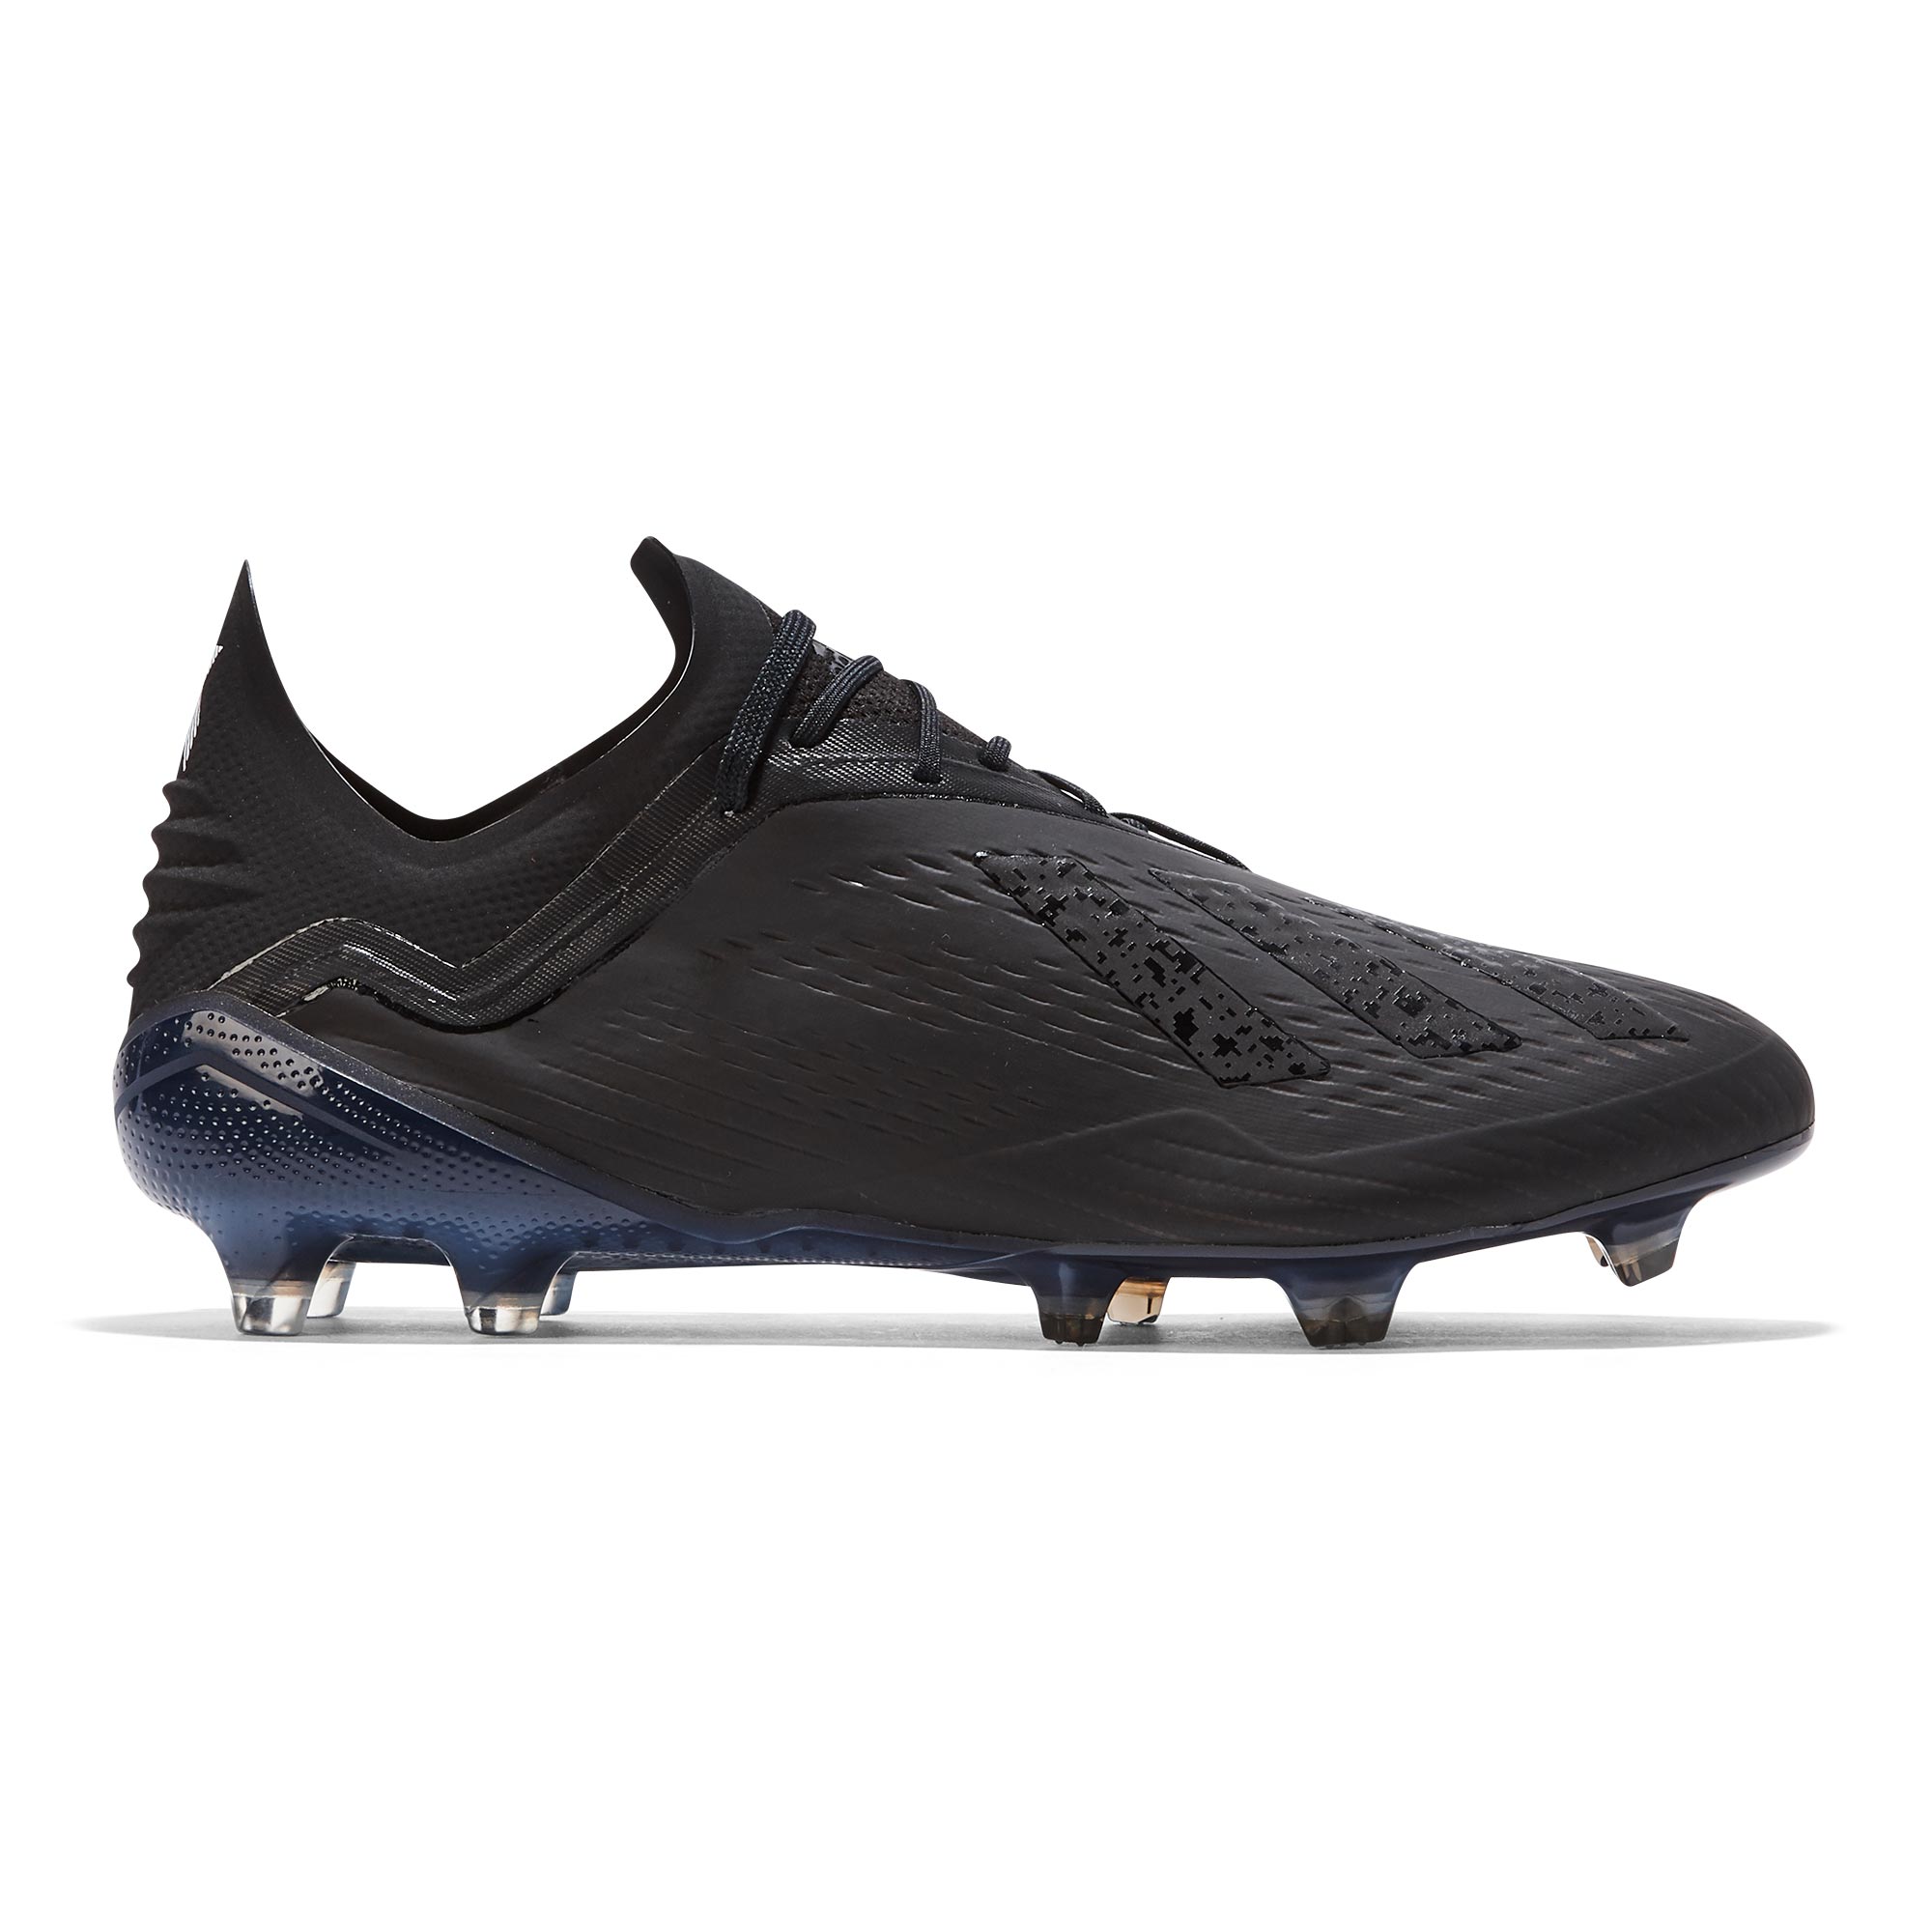 Adidas adidas X 18.1 Firm Ground Football Boots - Black